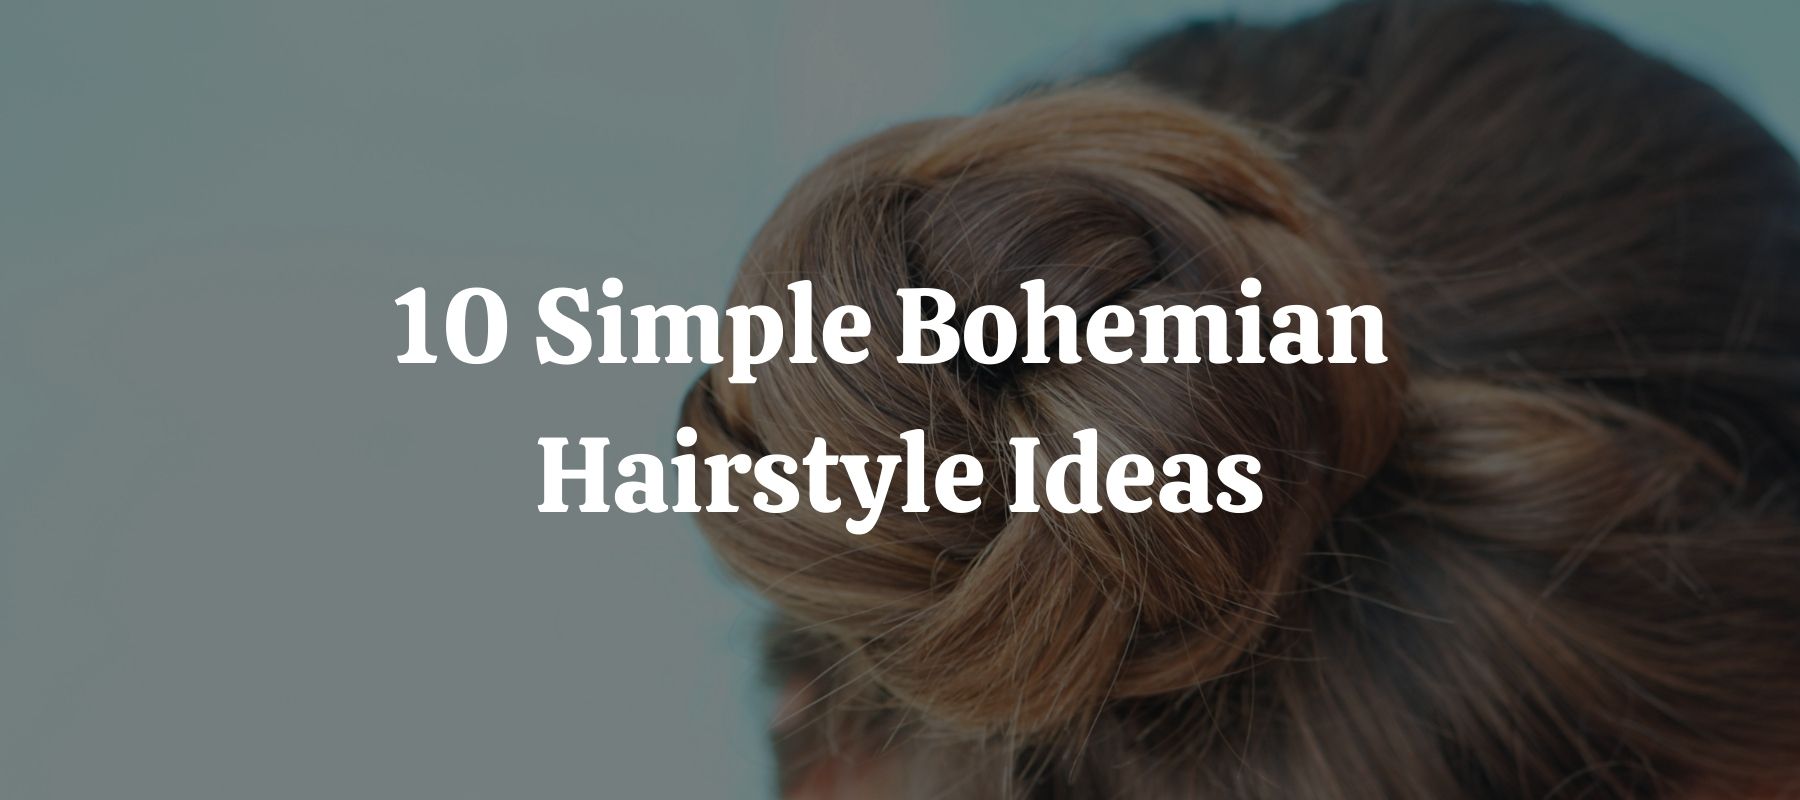 10 Simple Bohemian Hairstyle Ideas